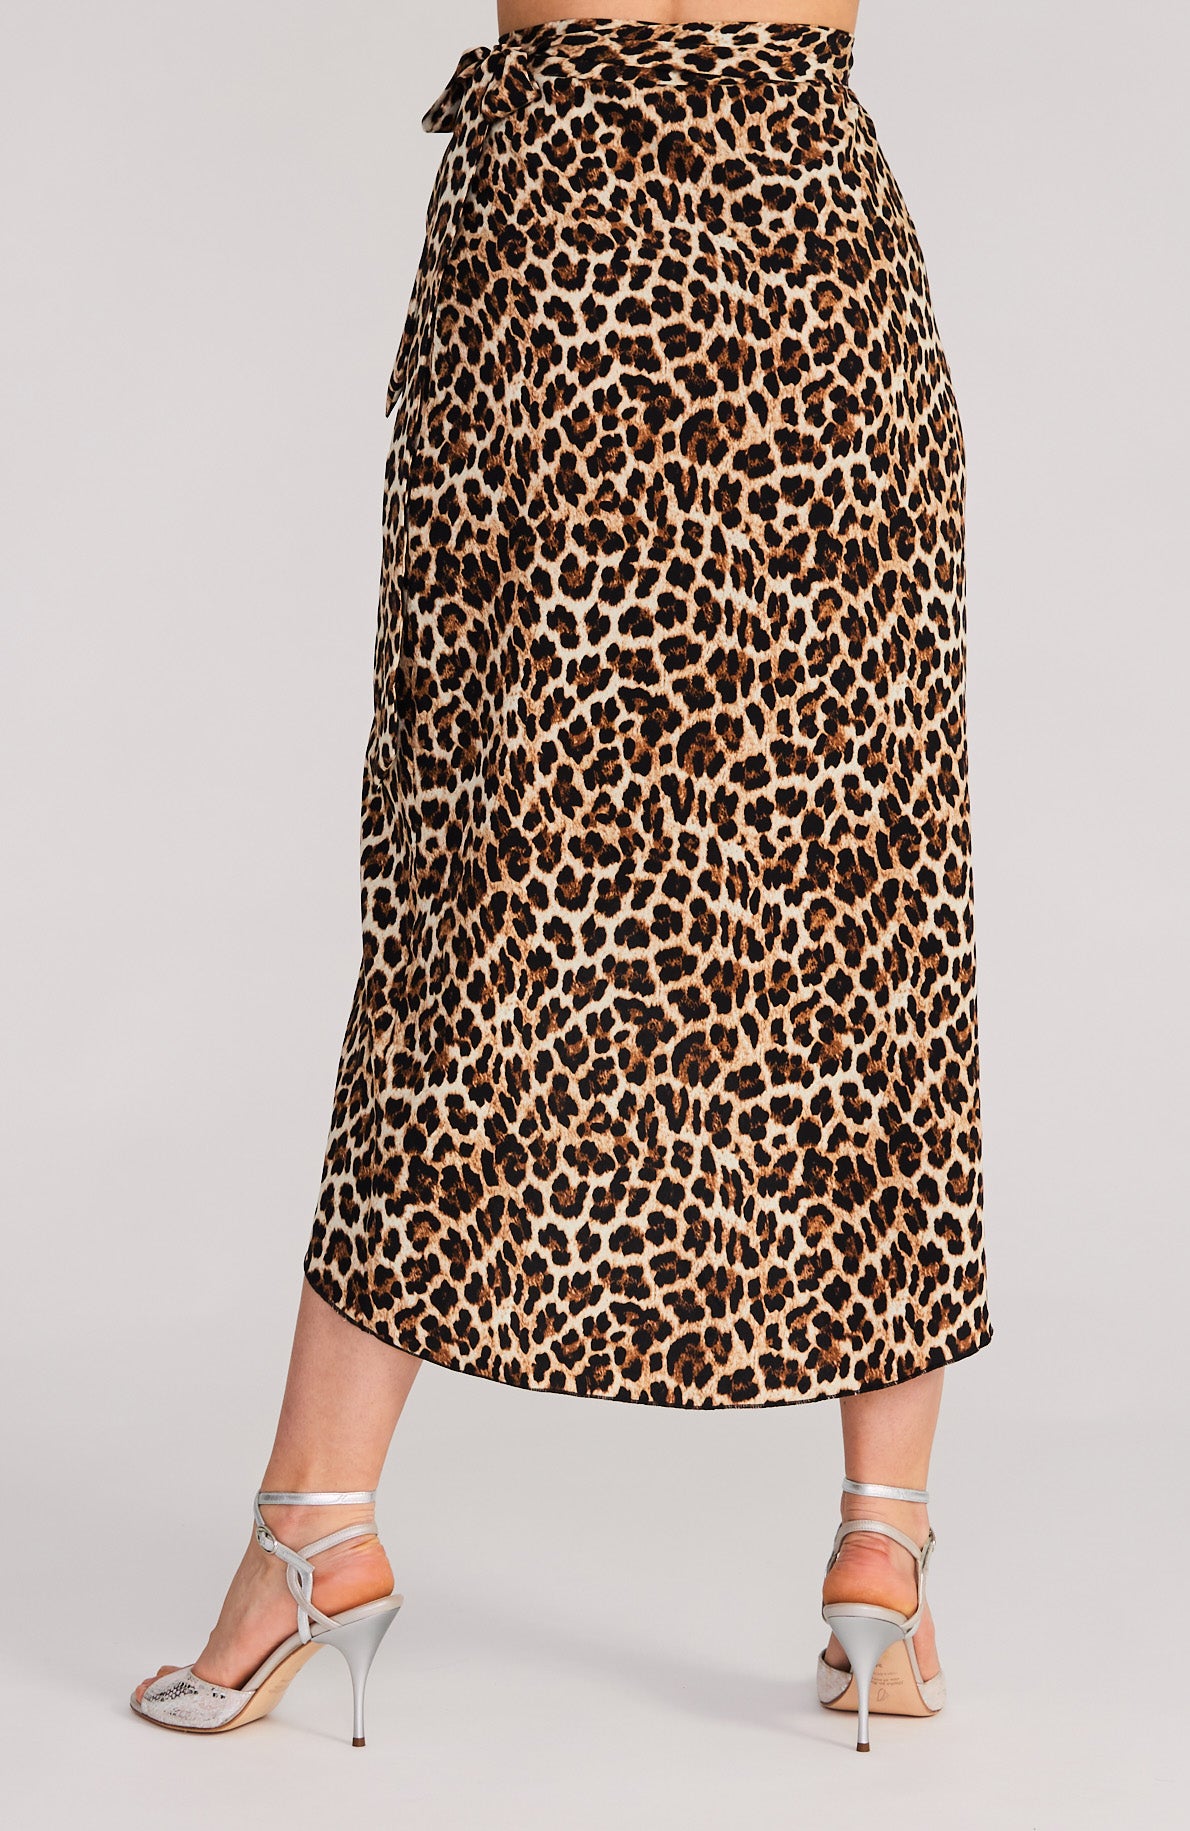 tango skirt in leopard print